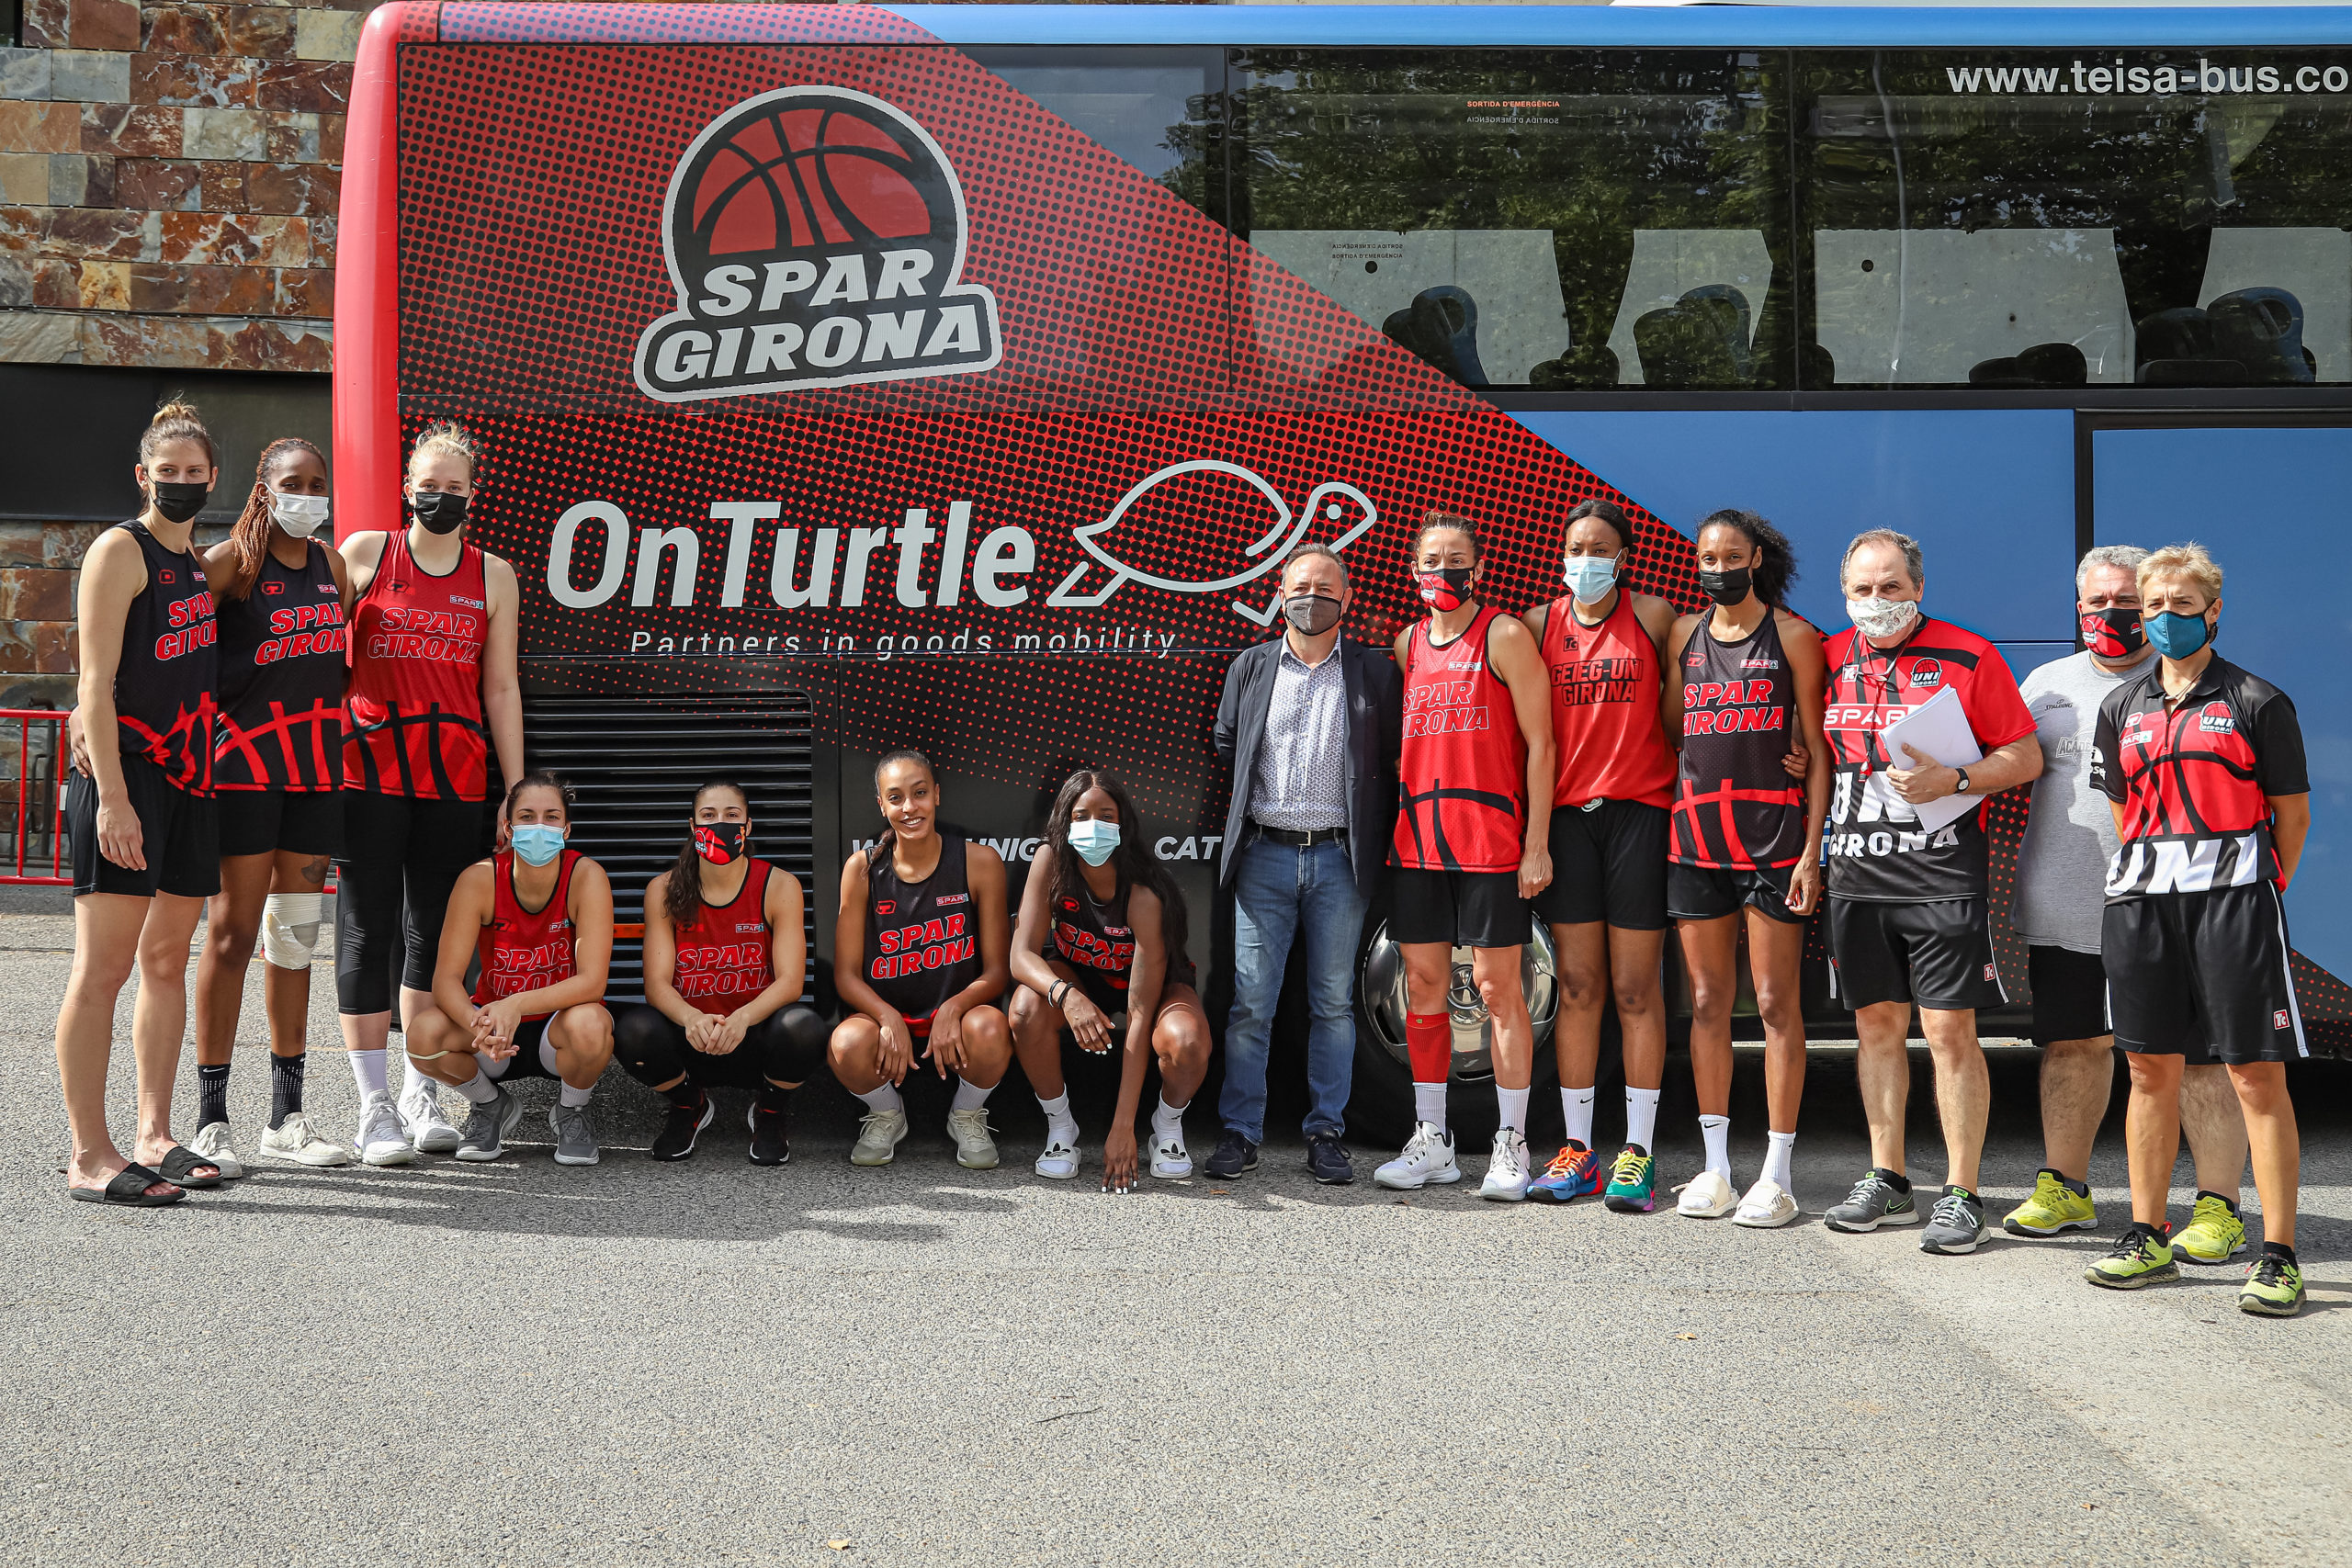 OnTurtle announces its sponsorship of the women’s basketball team Spar Girona